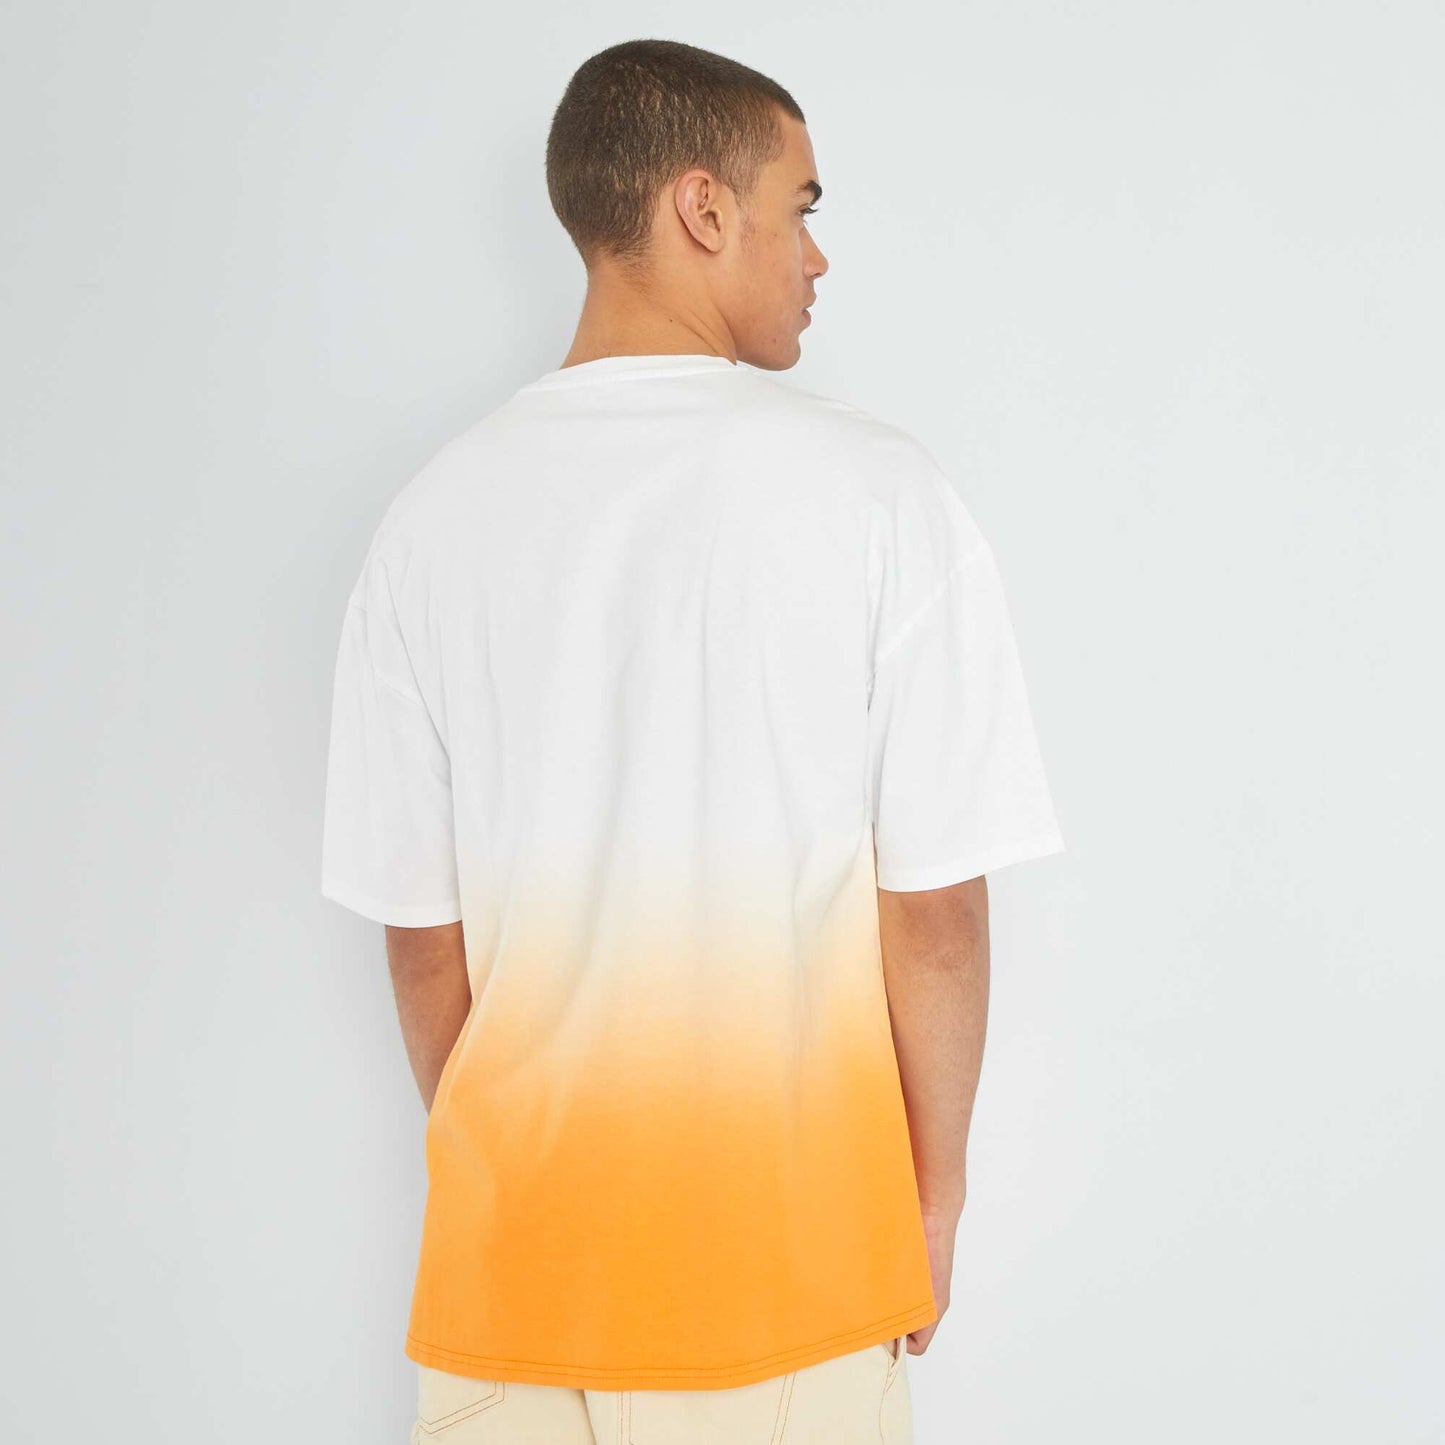 Camiseta con color degradado naranja